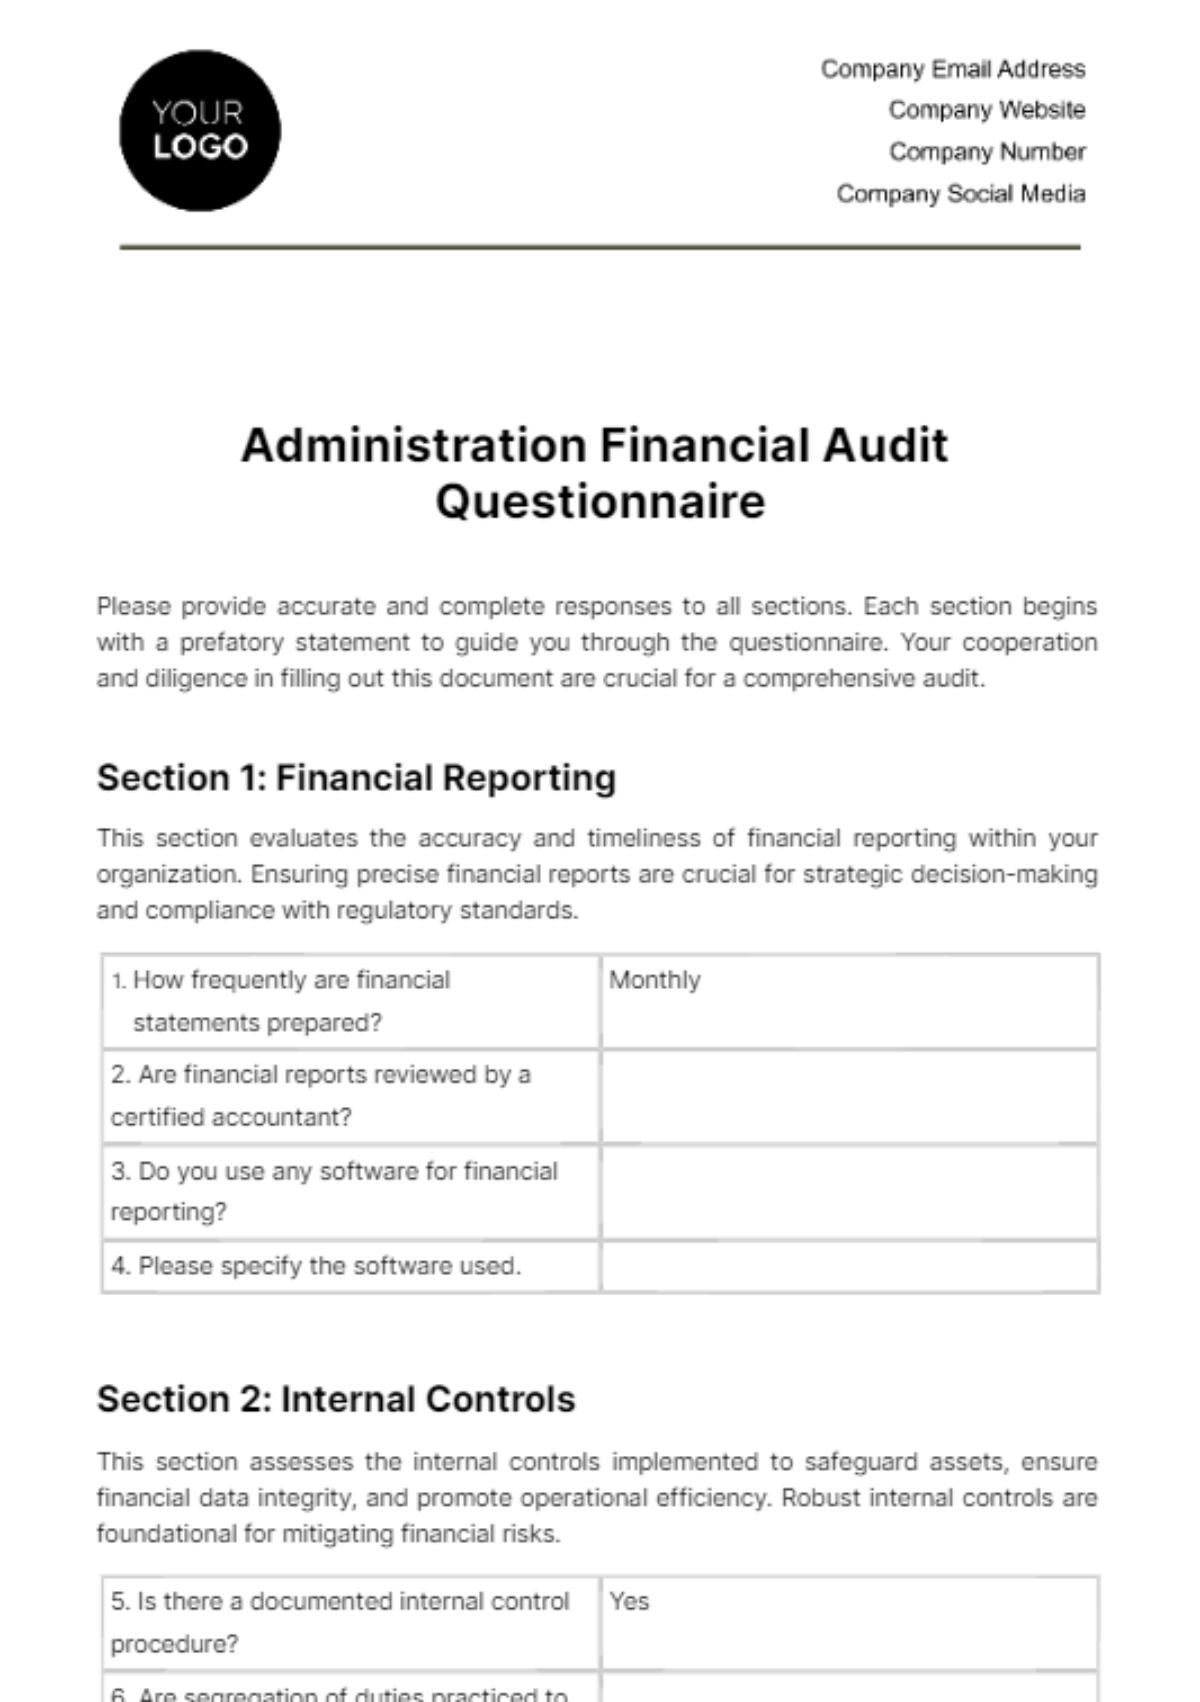 Administration Financial Audit Questionnaire Template